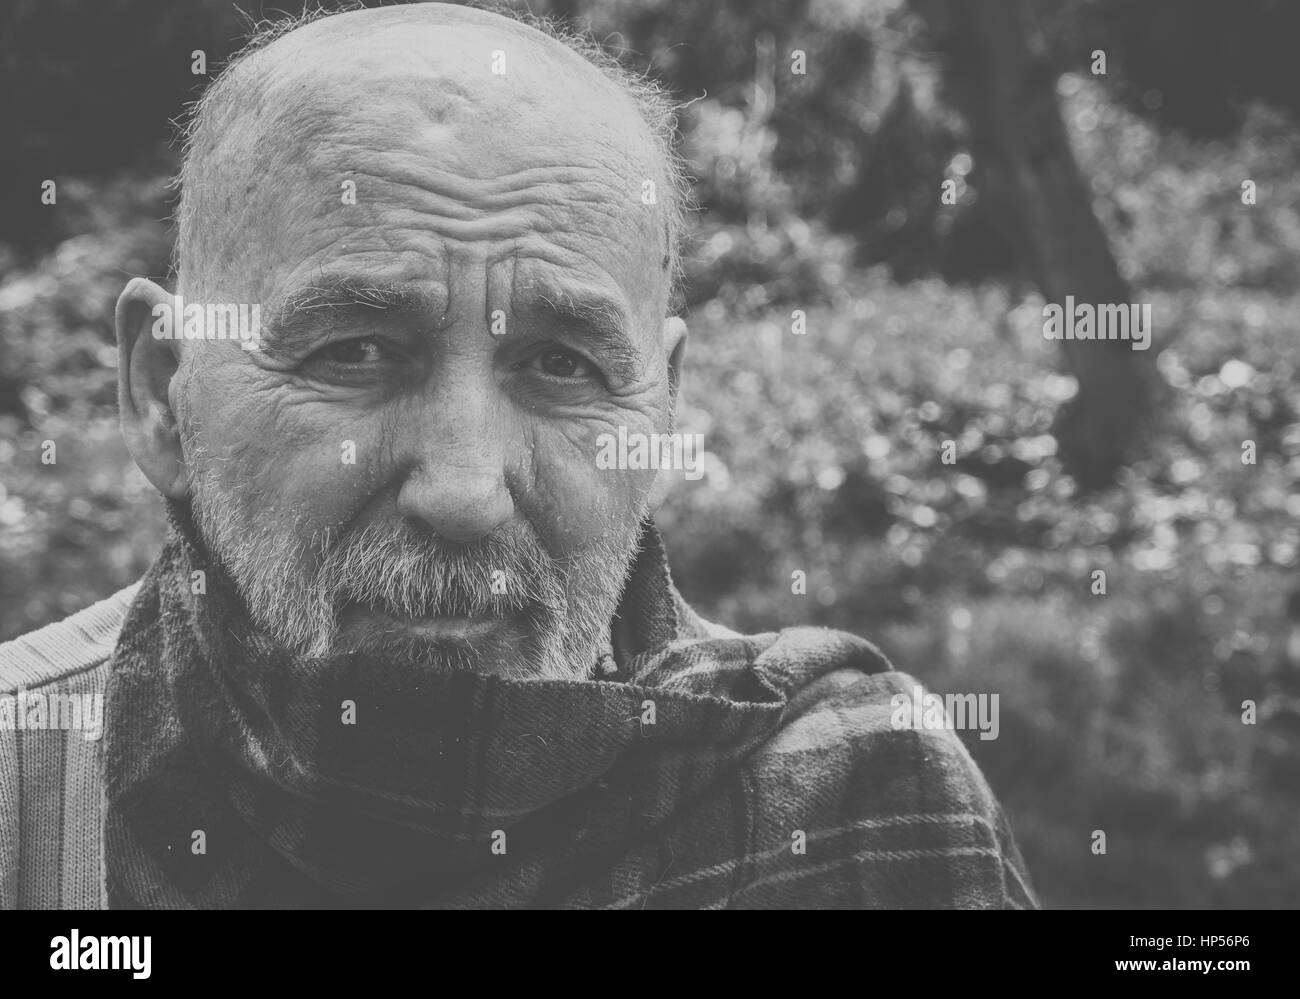 Old senior man Stock Photo